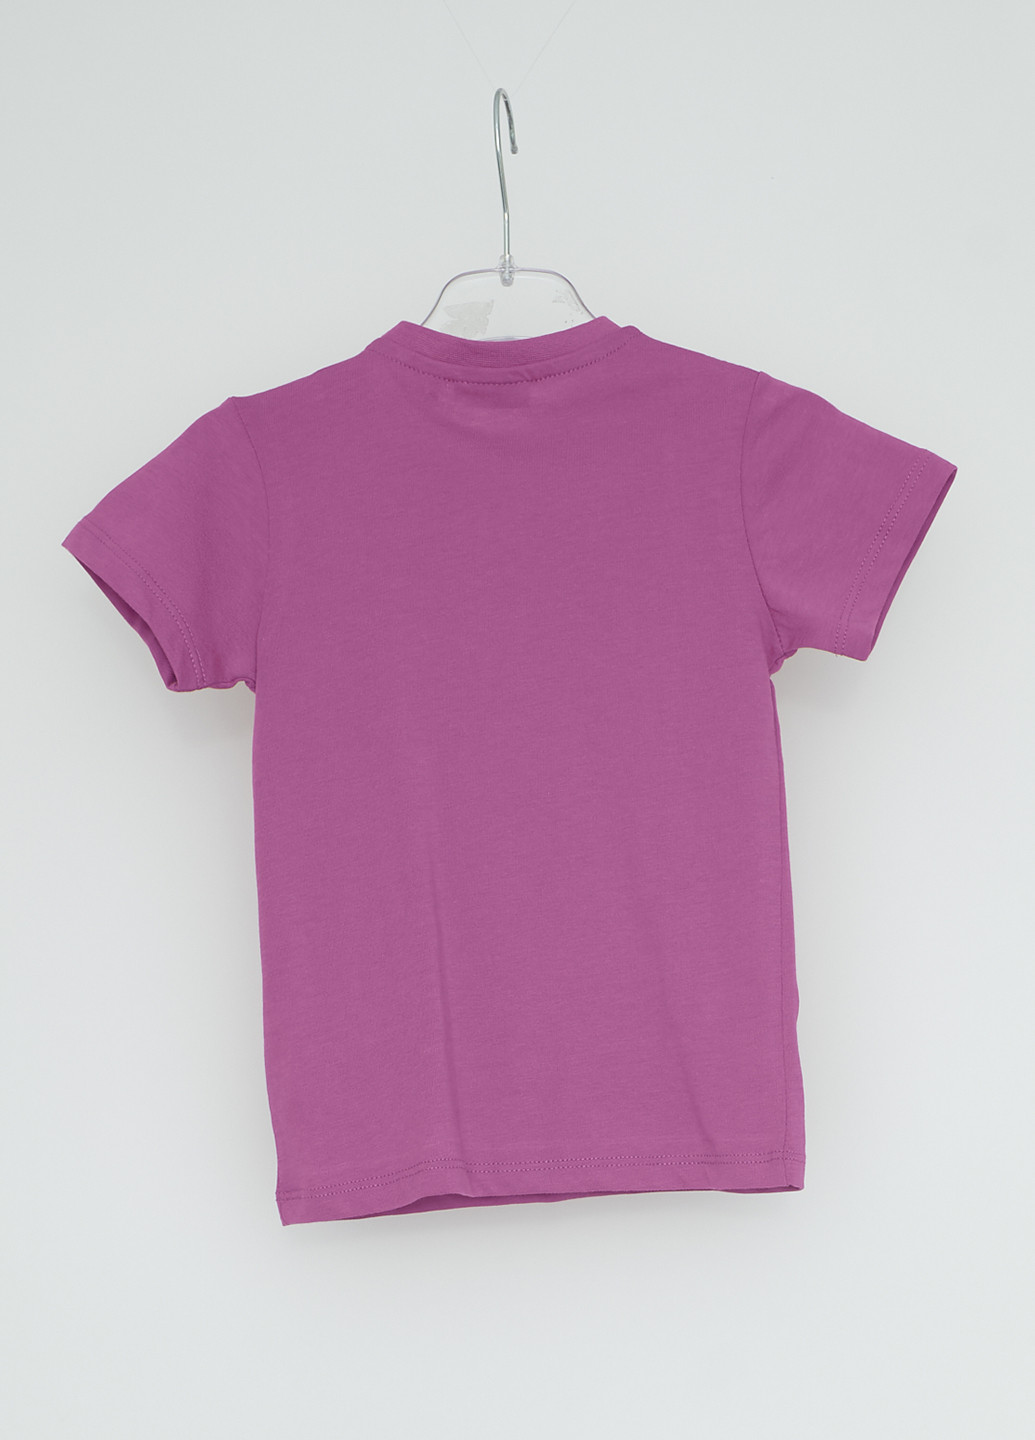 Светло-фиолетовая летняя футболка с коротким рукавом Mexx